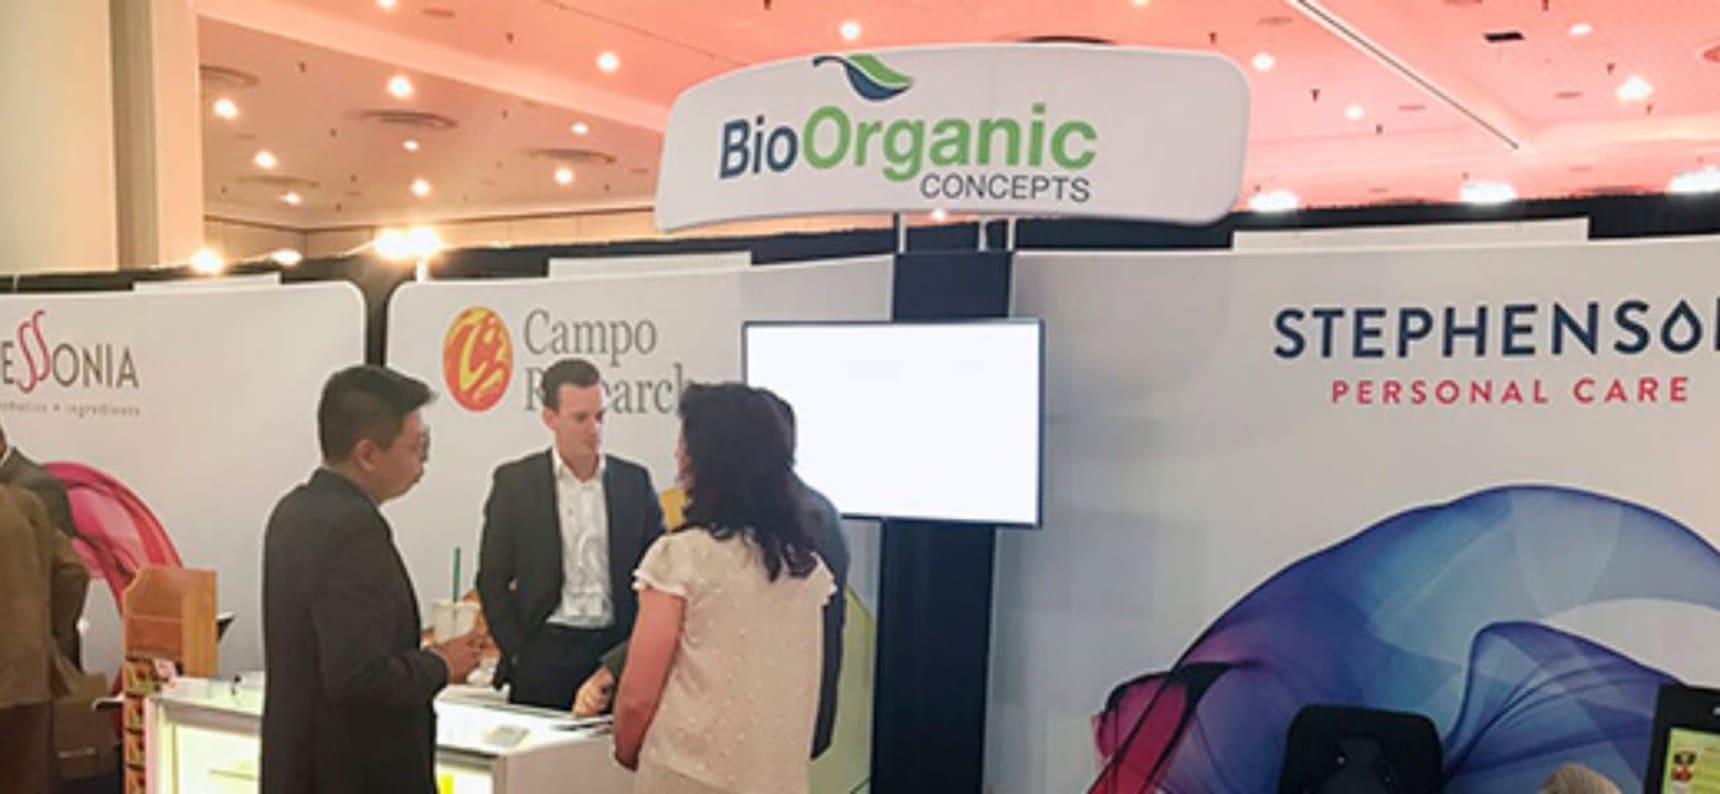 BioOrganic Concepts banner